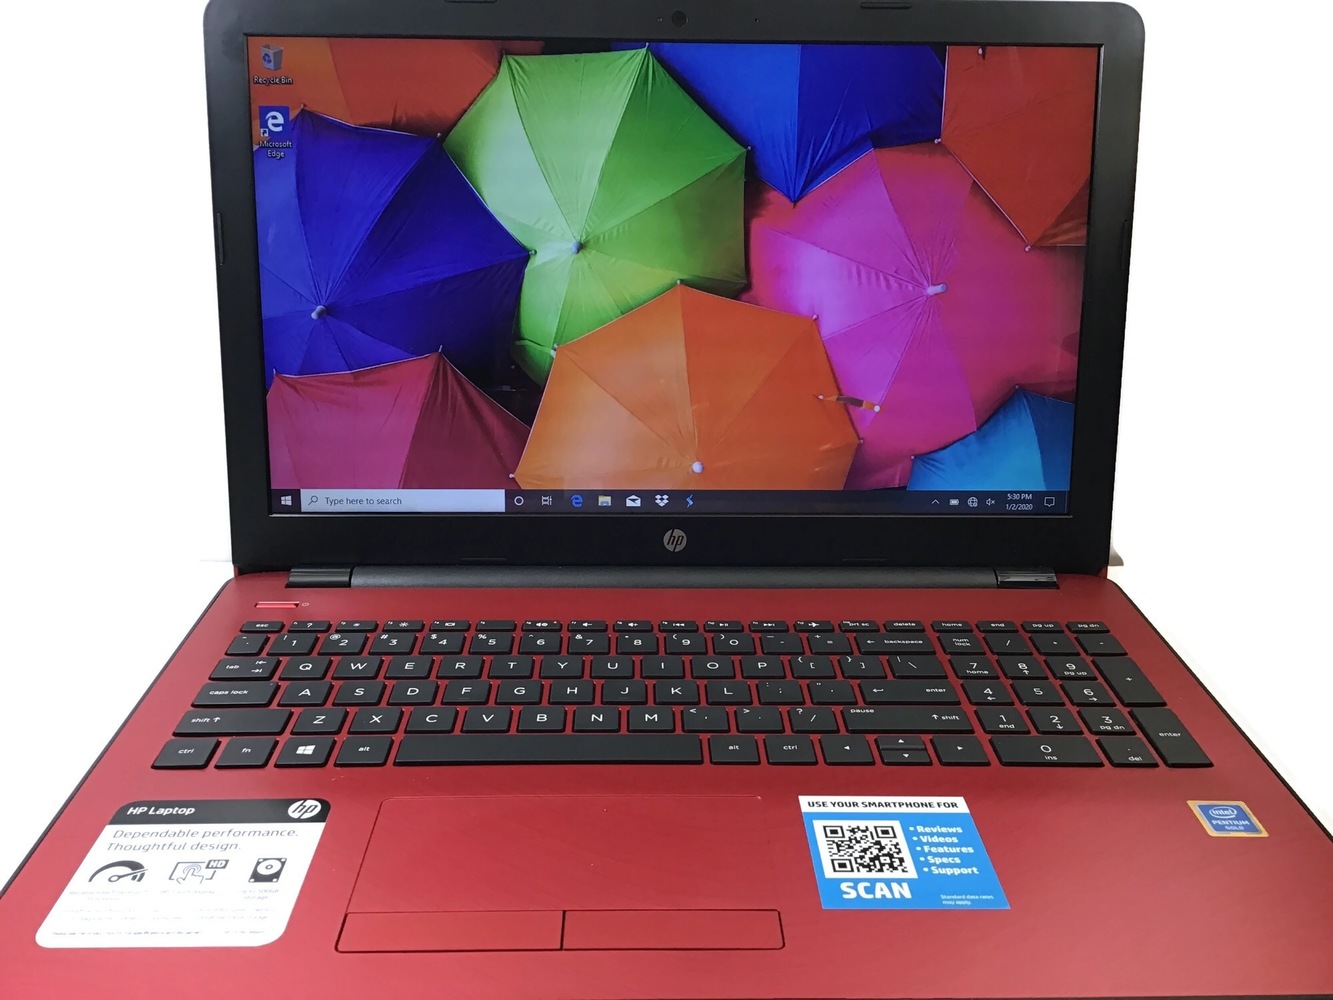 HP 15-bs144wm Laptop 15.6" HD Touchscreen Gold 4417U 2.3GHz 4GB RAM